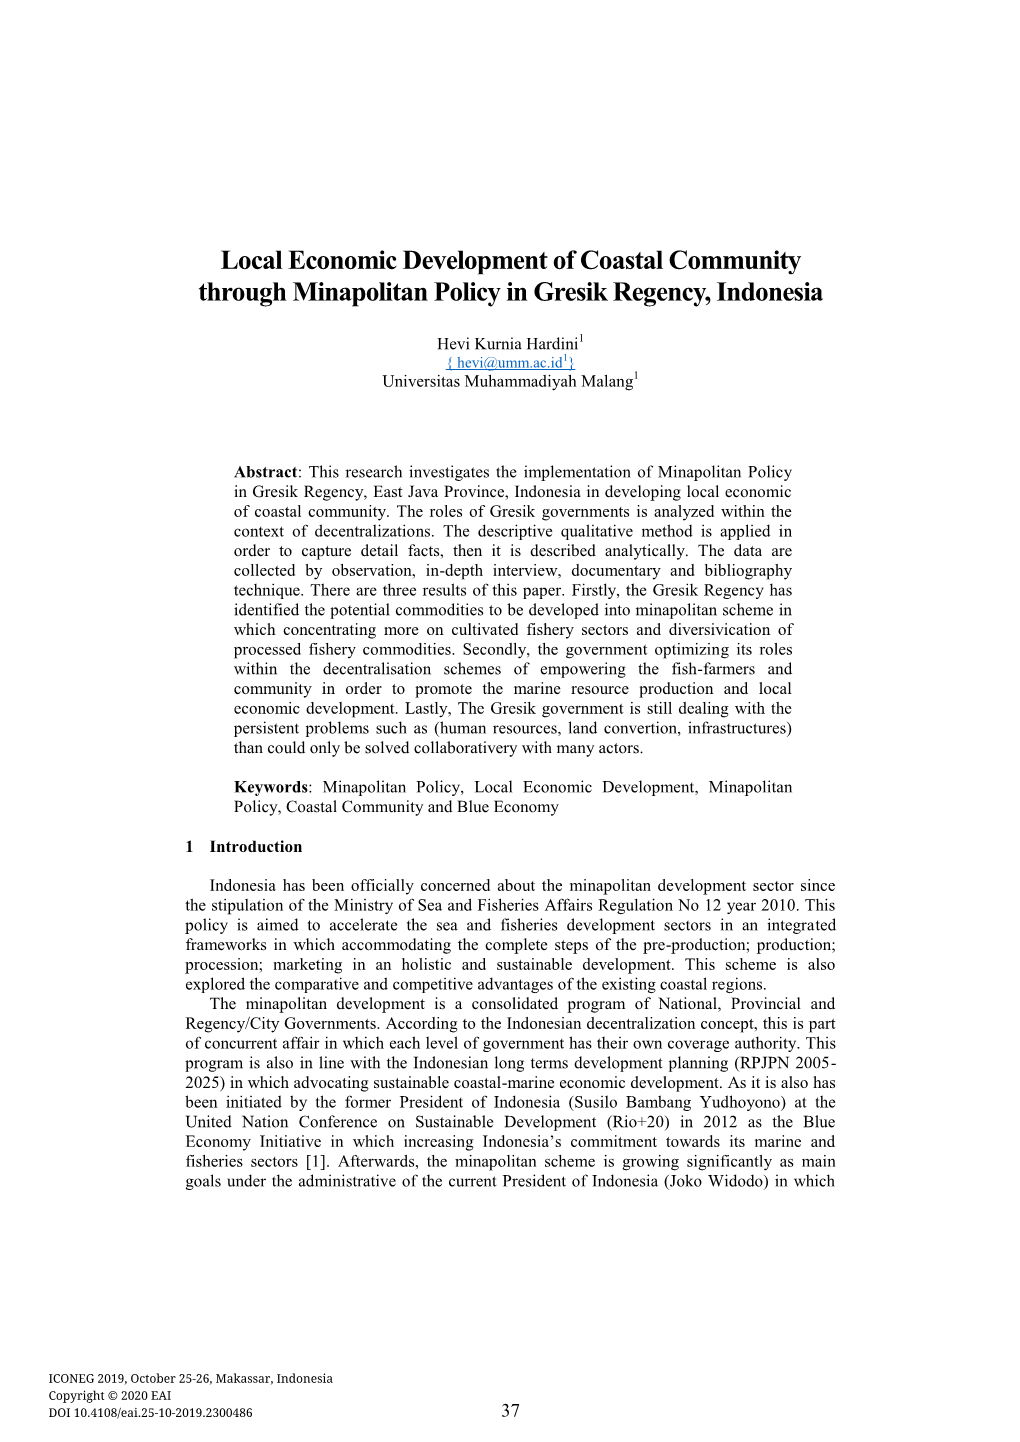 Local Economic Development of Coastal Community Through Minapolitan Policy in Gresik Regency, Indonesia